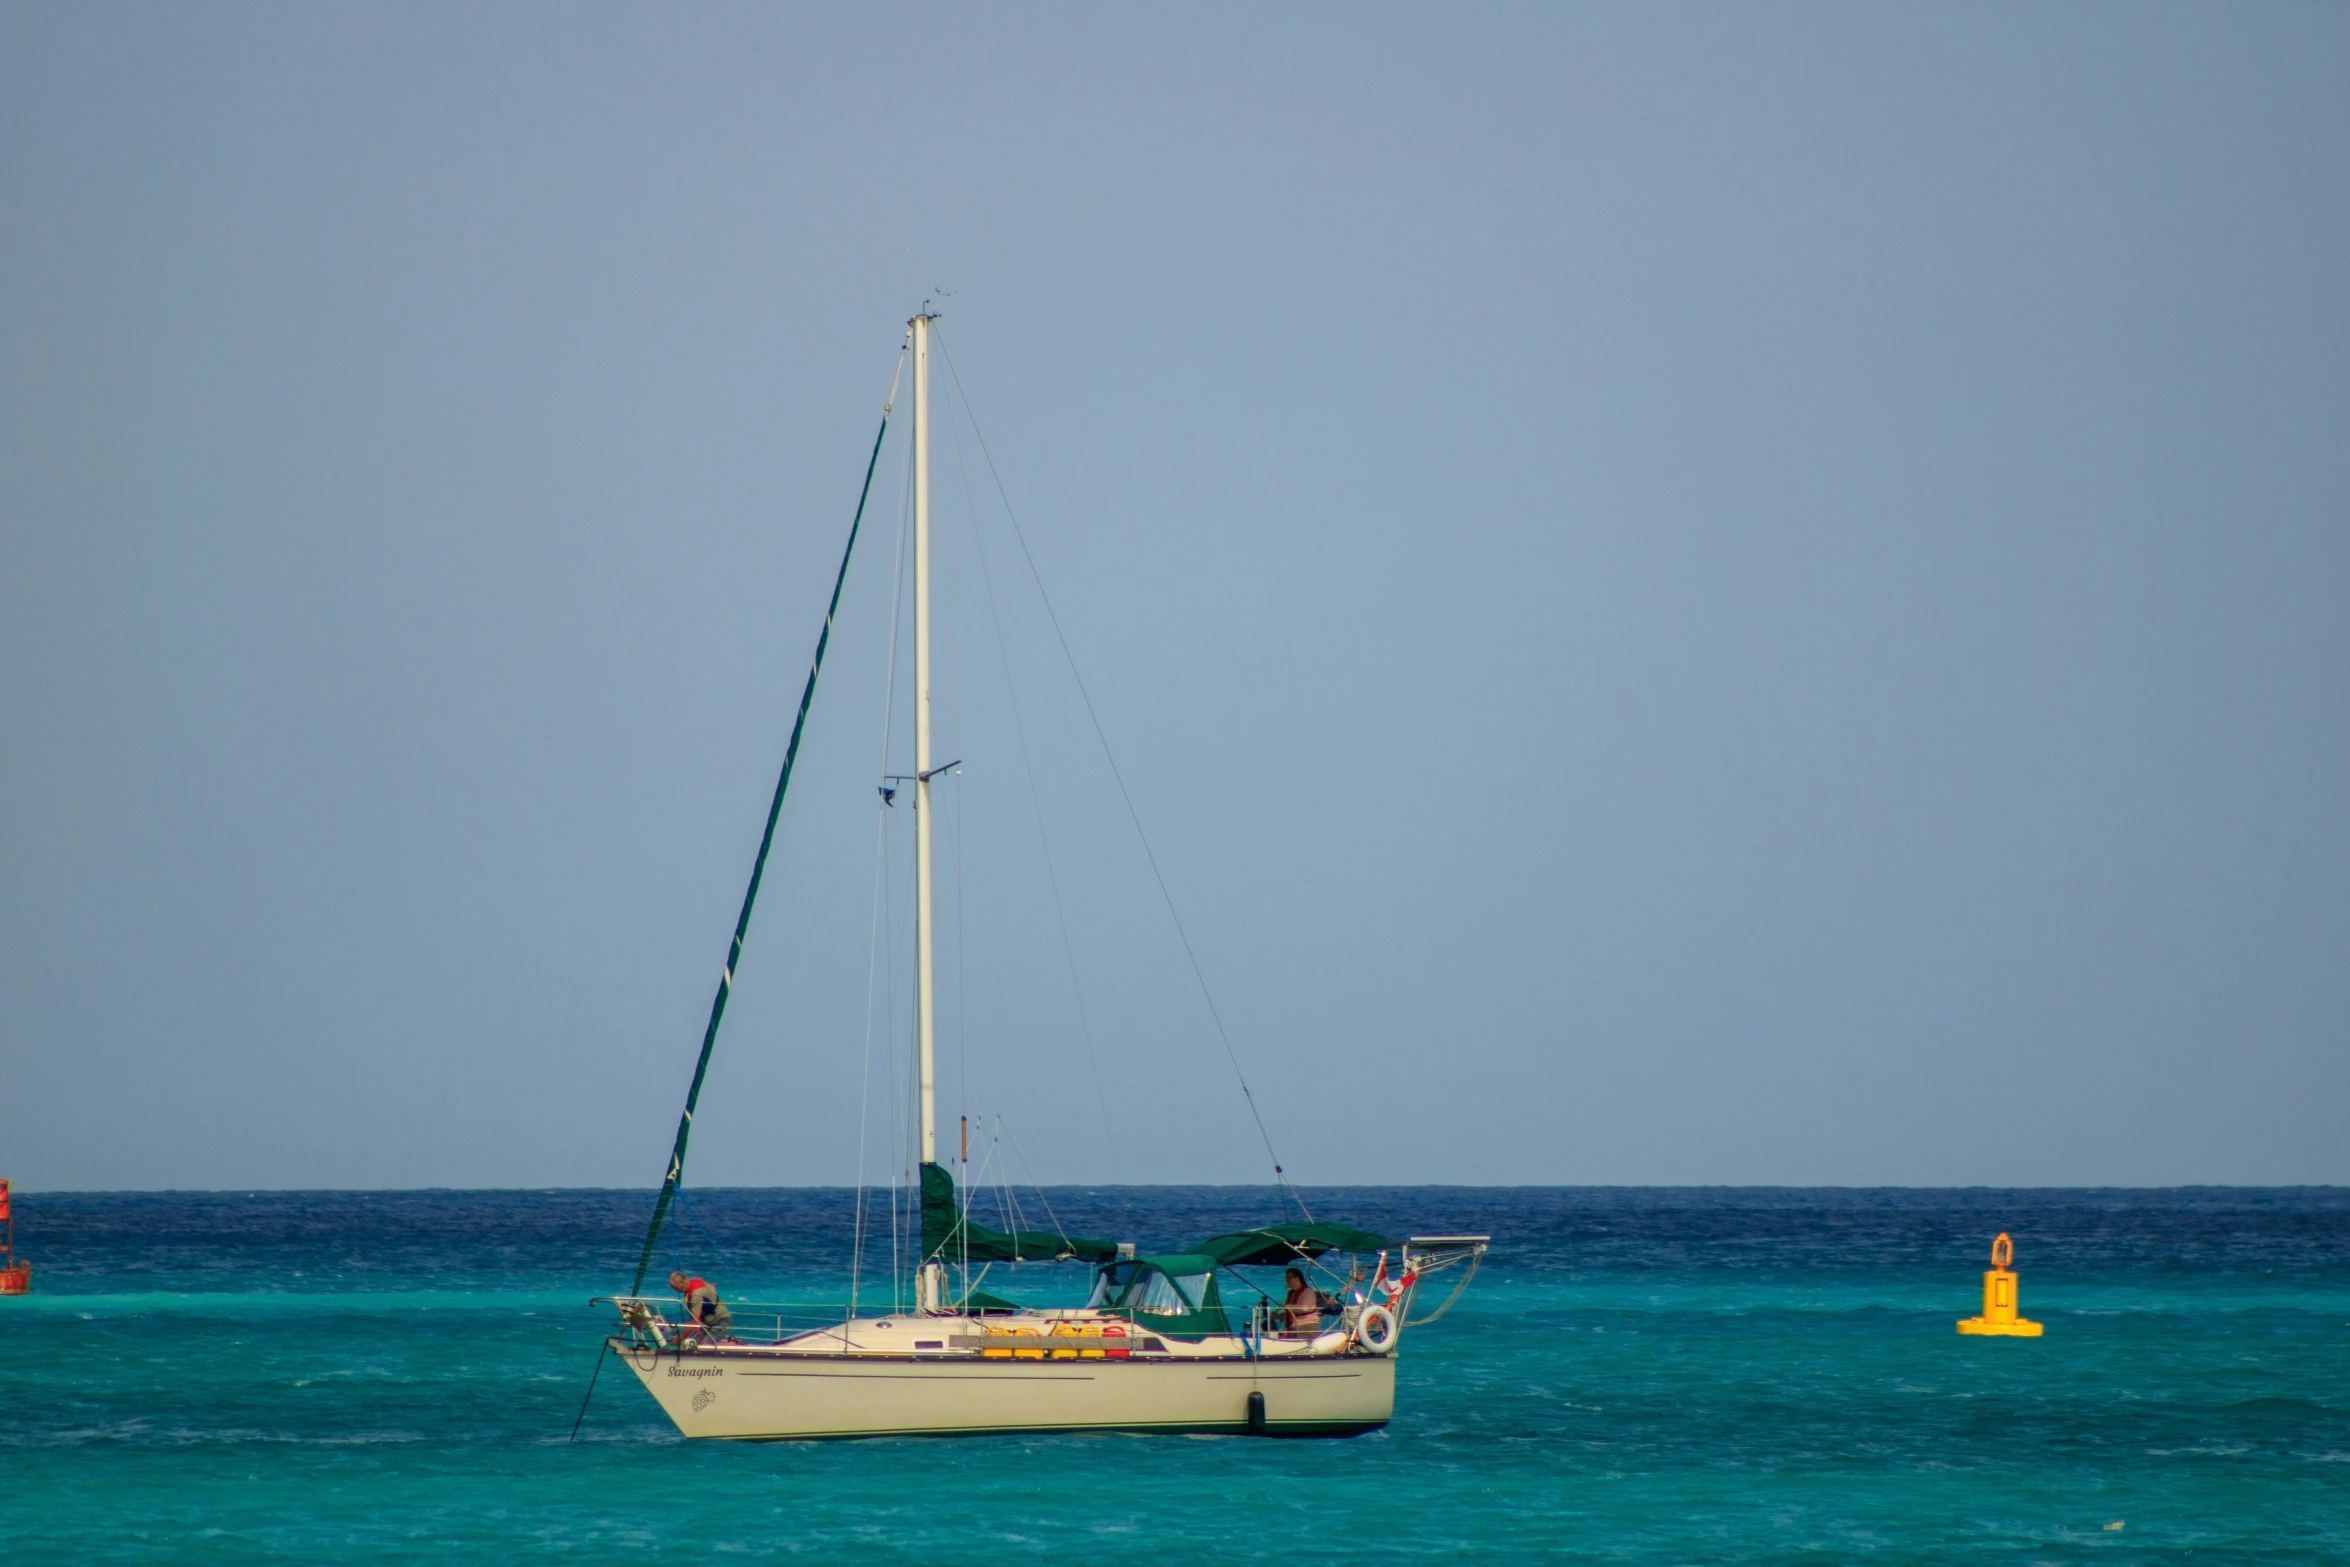 an sailboat floats in the open ocean